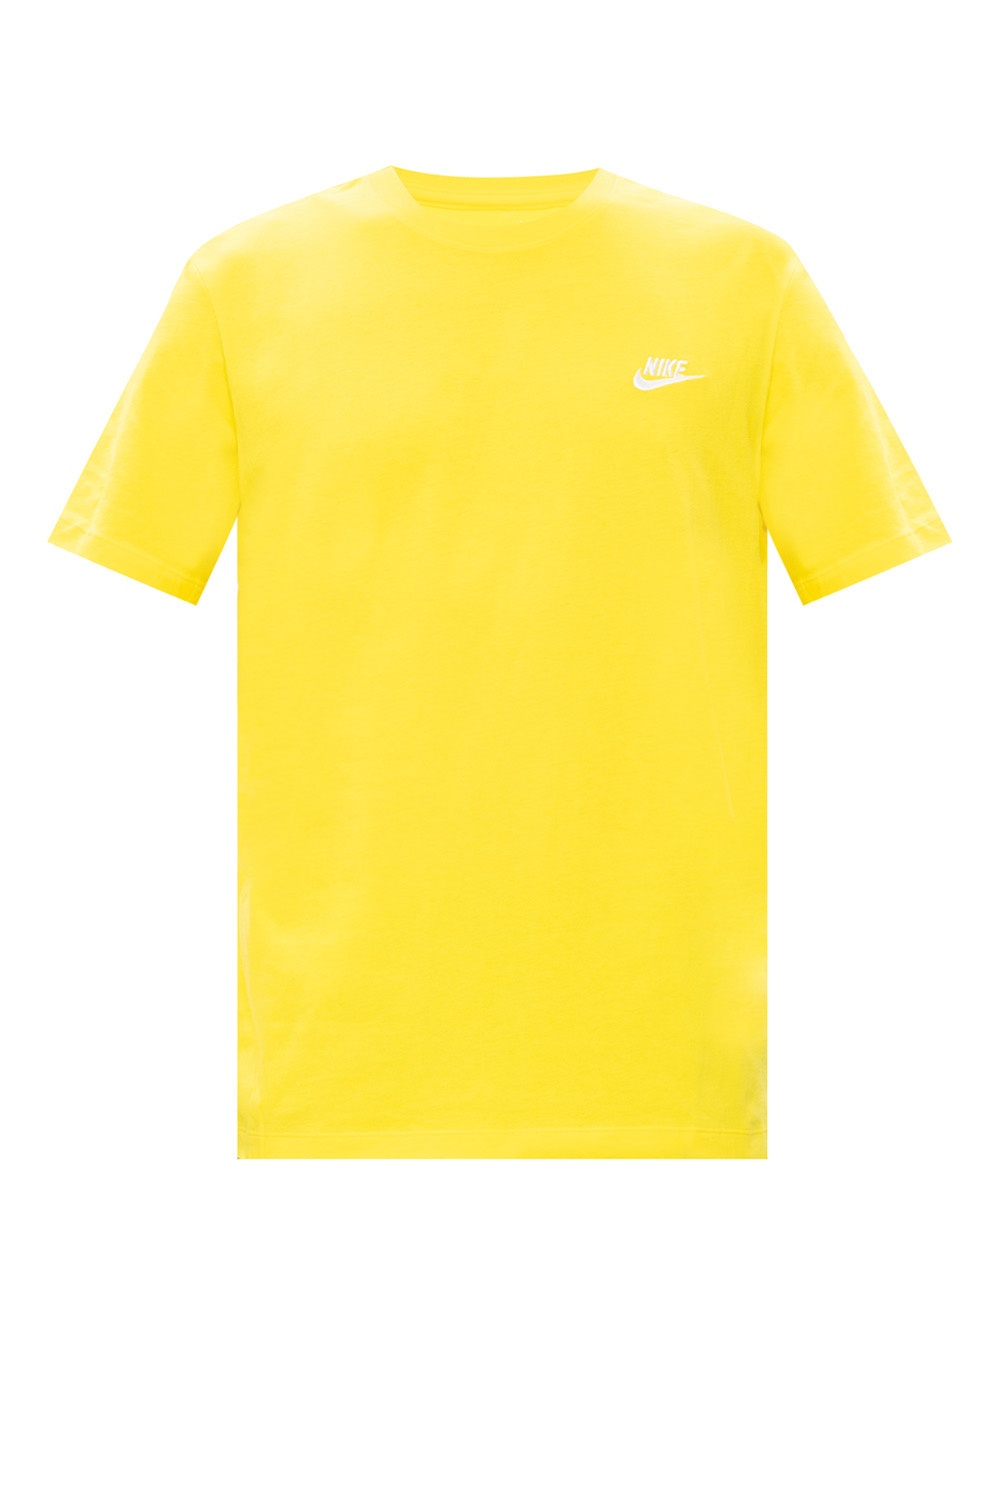 yellow shirt nike